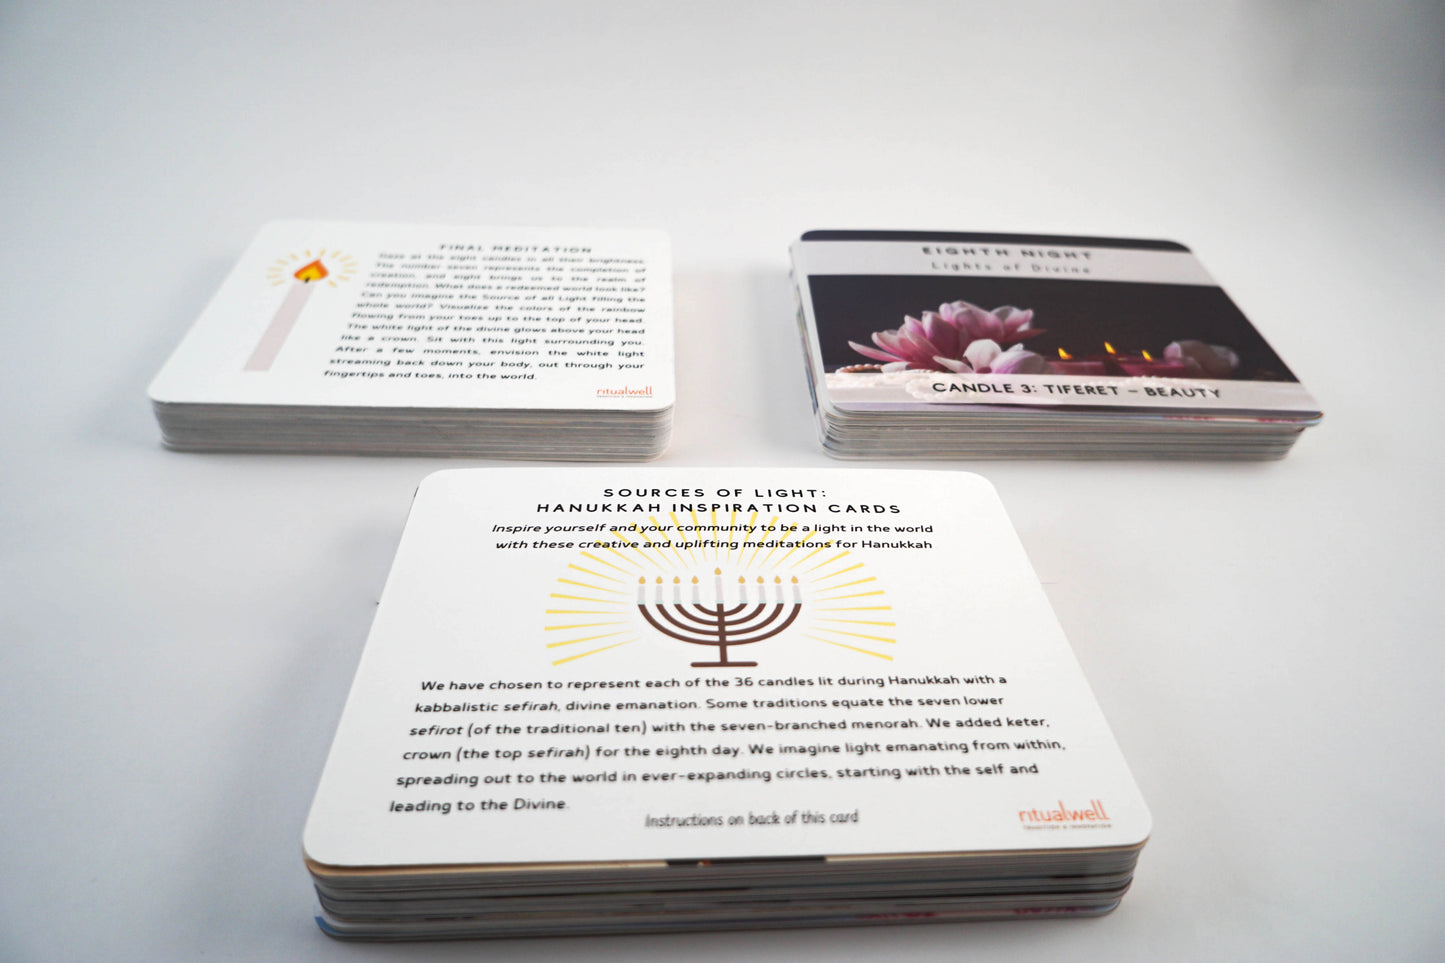 Sources of Light: Hanukkah Inspiration Cards